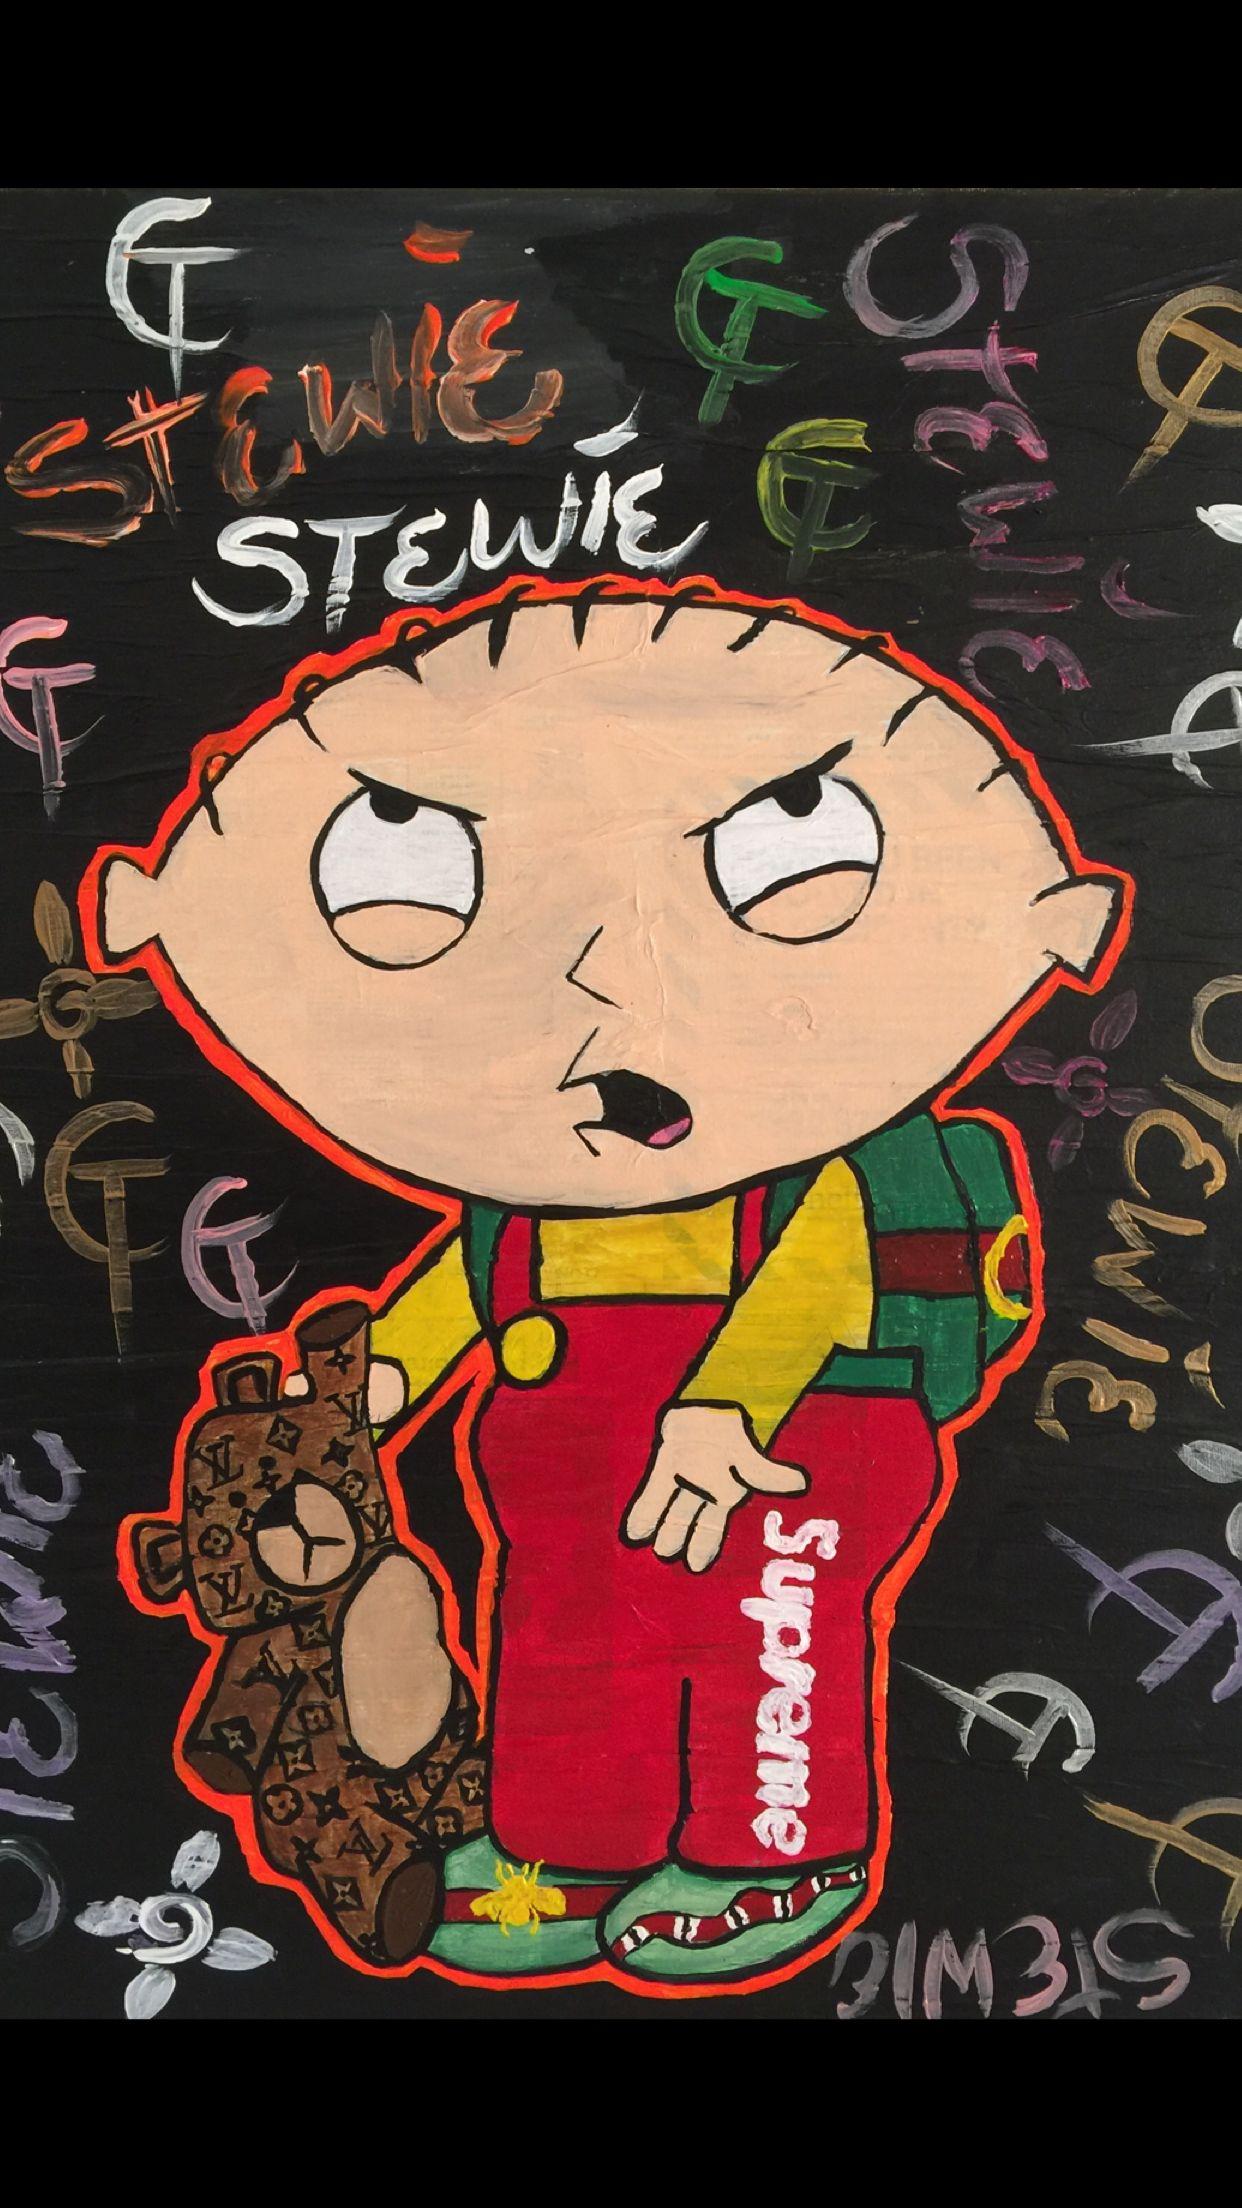 Stewie griffin family guy designer painting. Ts. Stewie